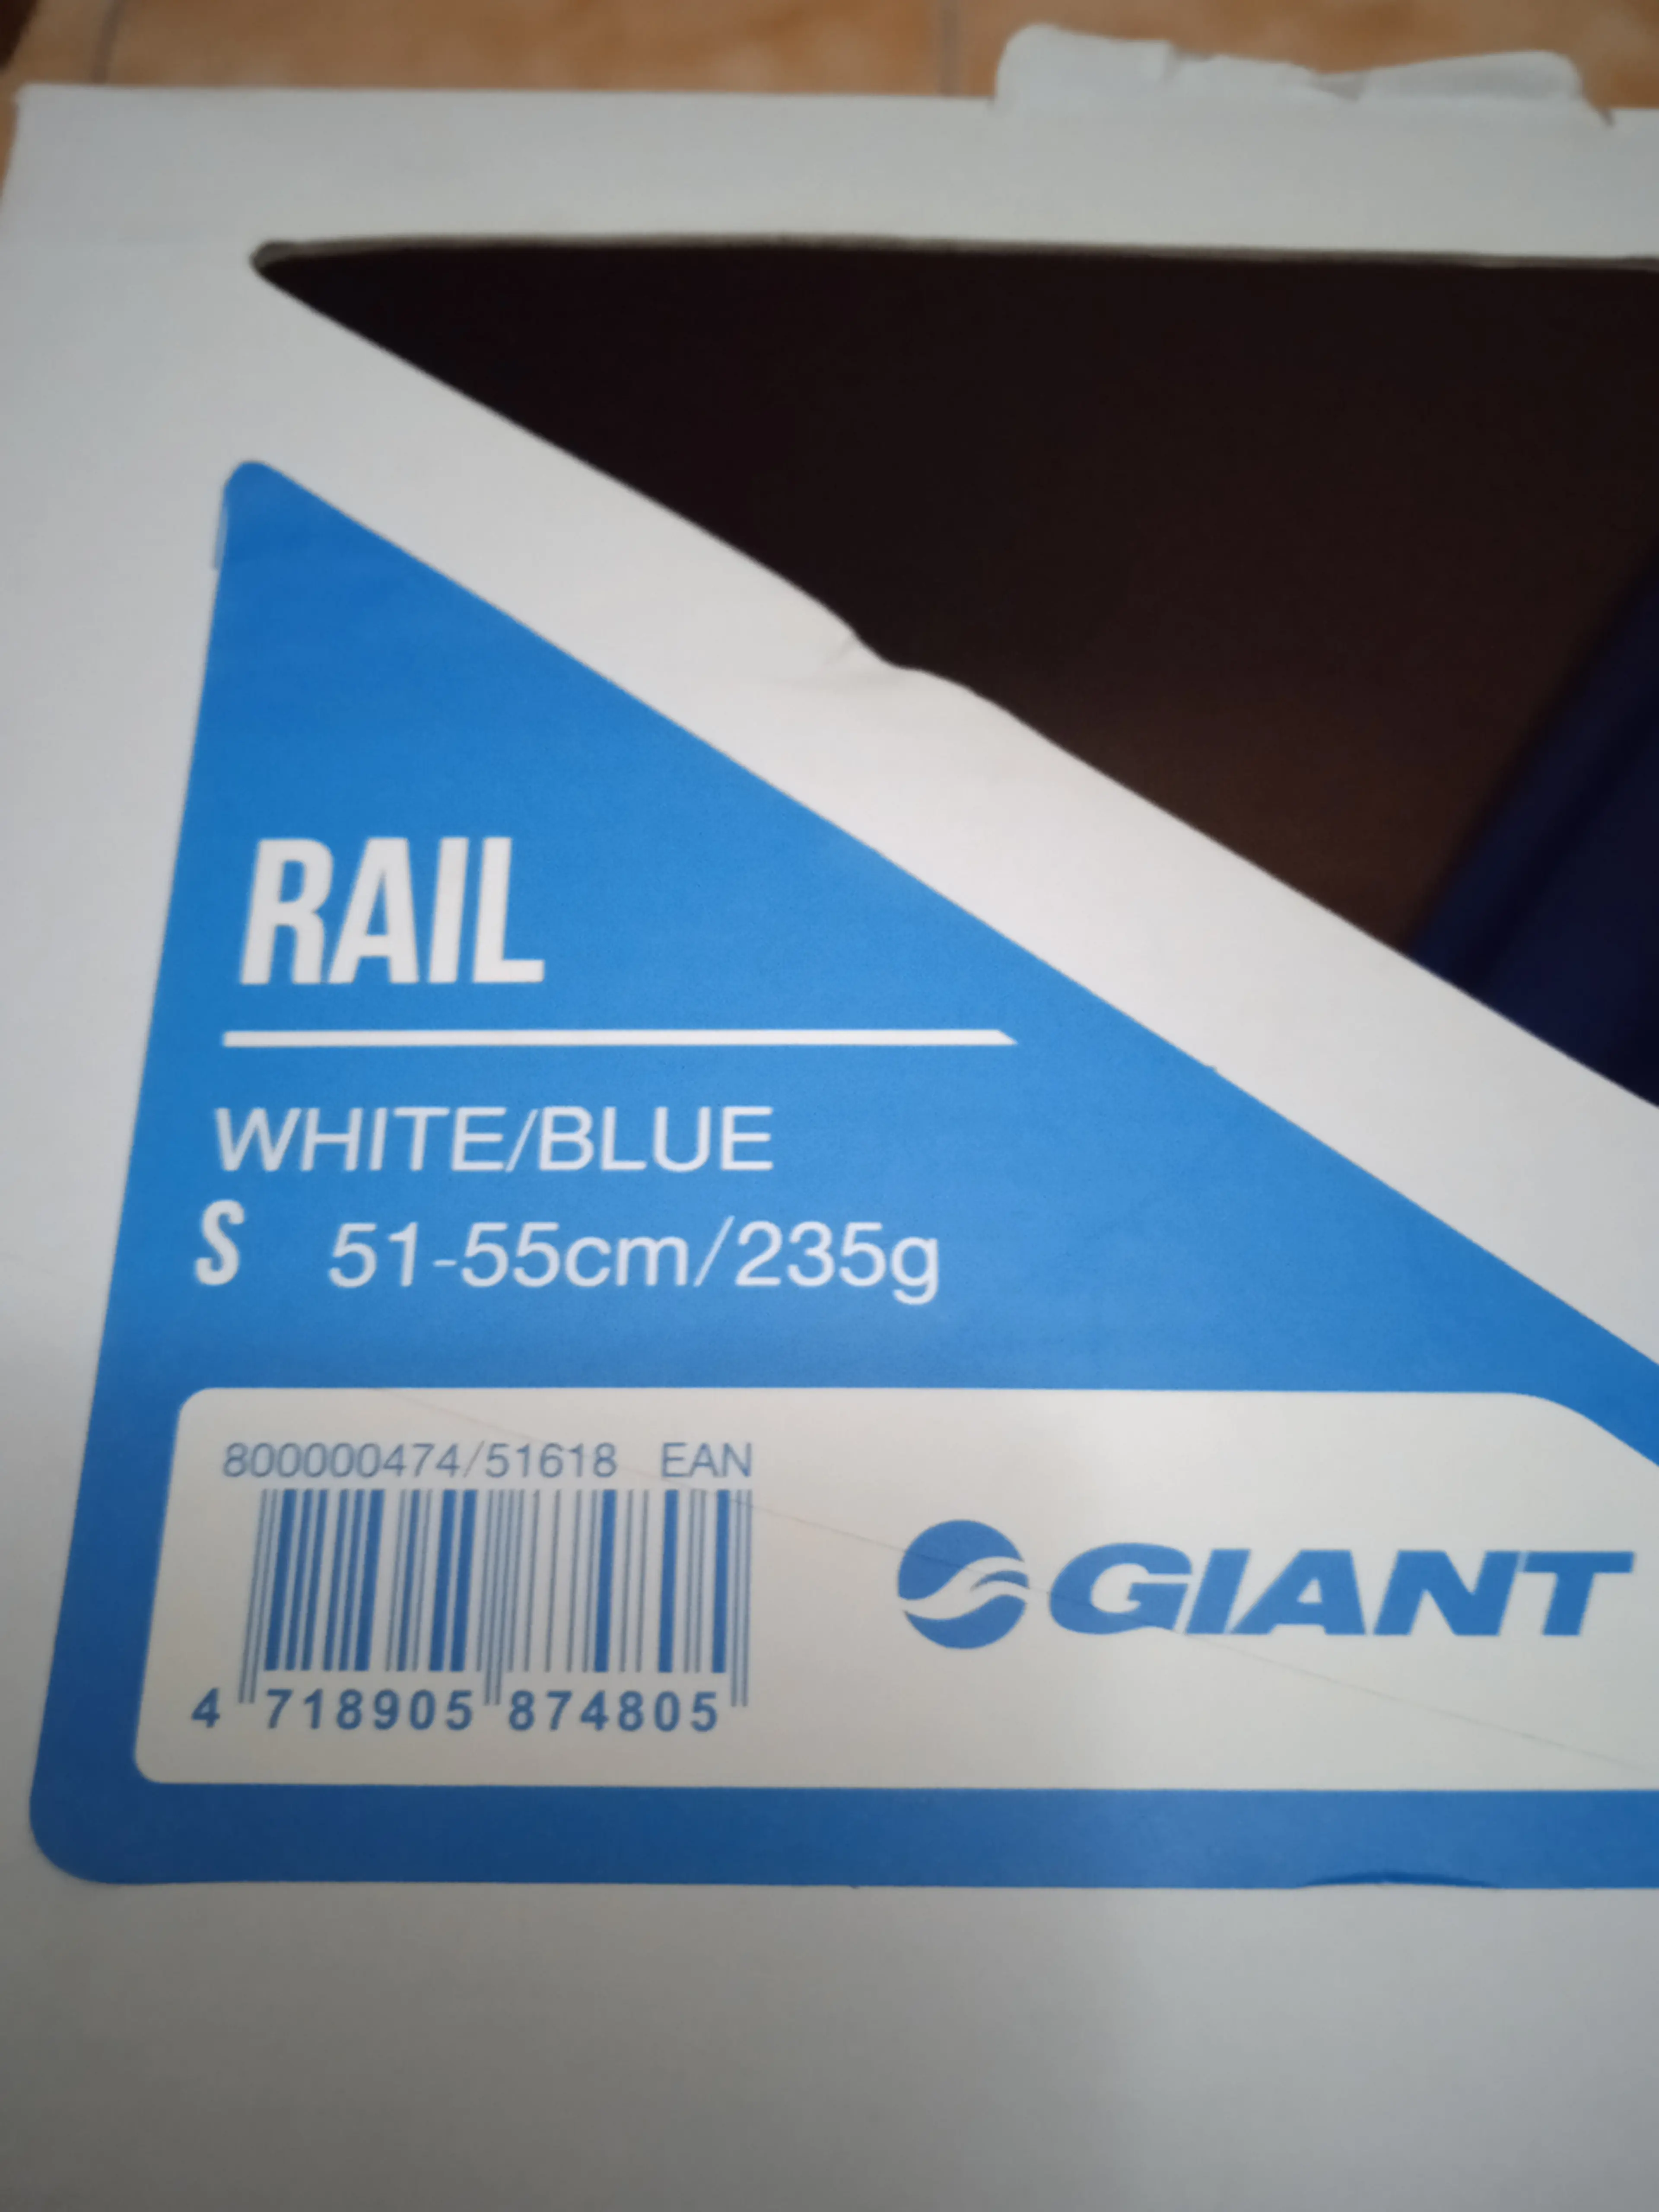 3. Casca Giant Rail alb albastru